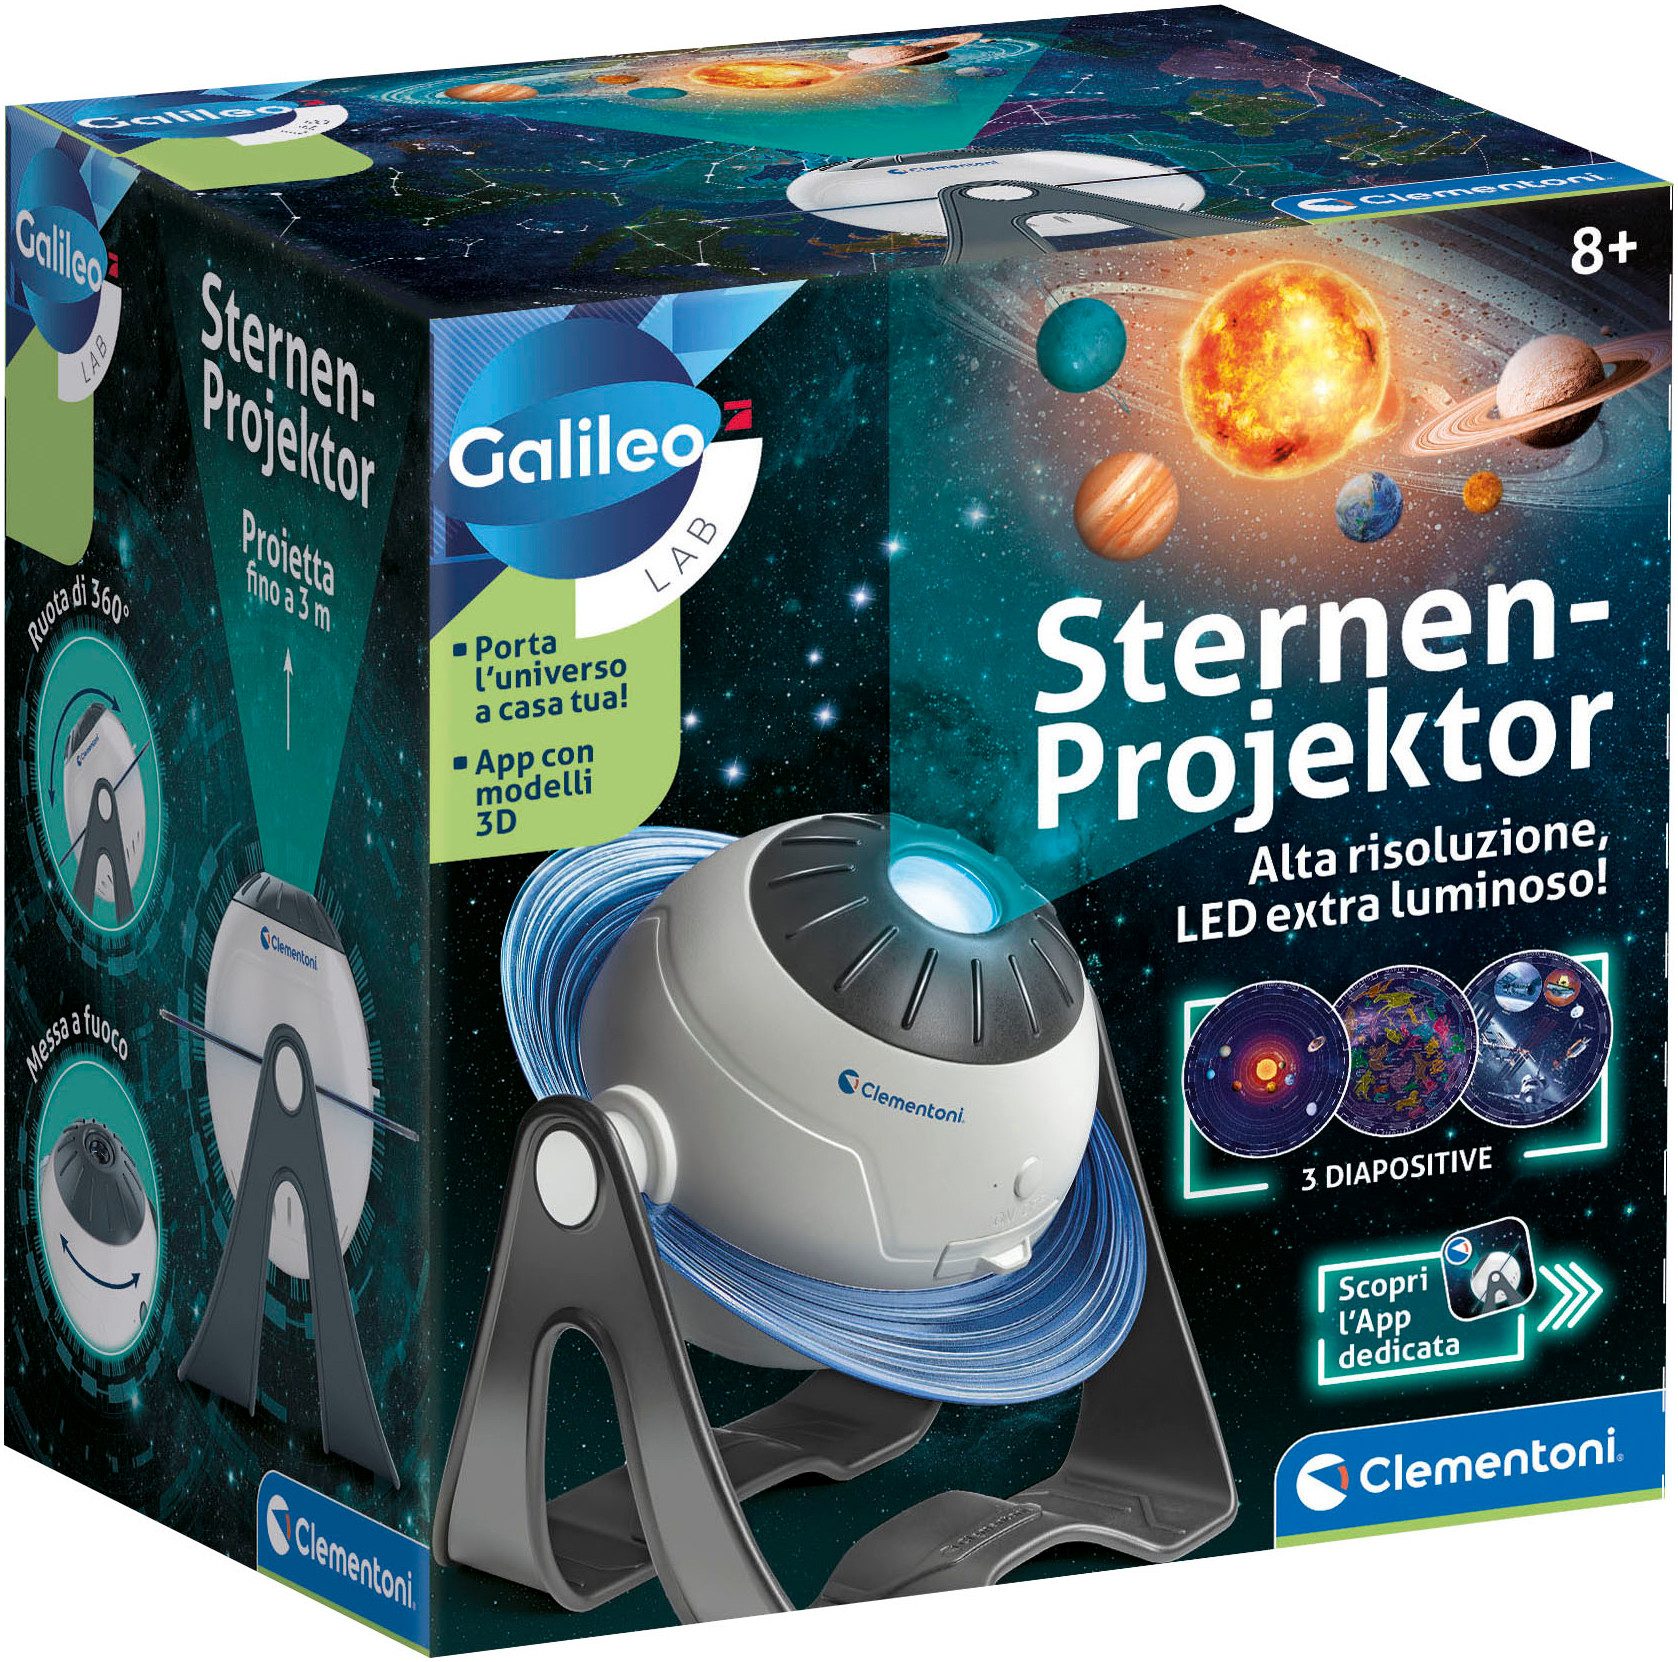 Clementoni® Experimentierkasten Galileo Lab, Sternen-Projektor, Made in Europe